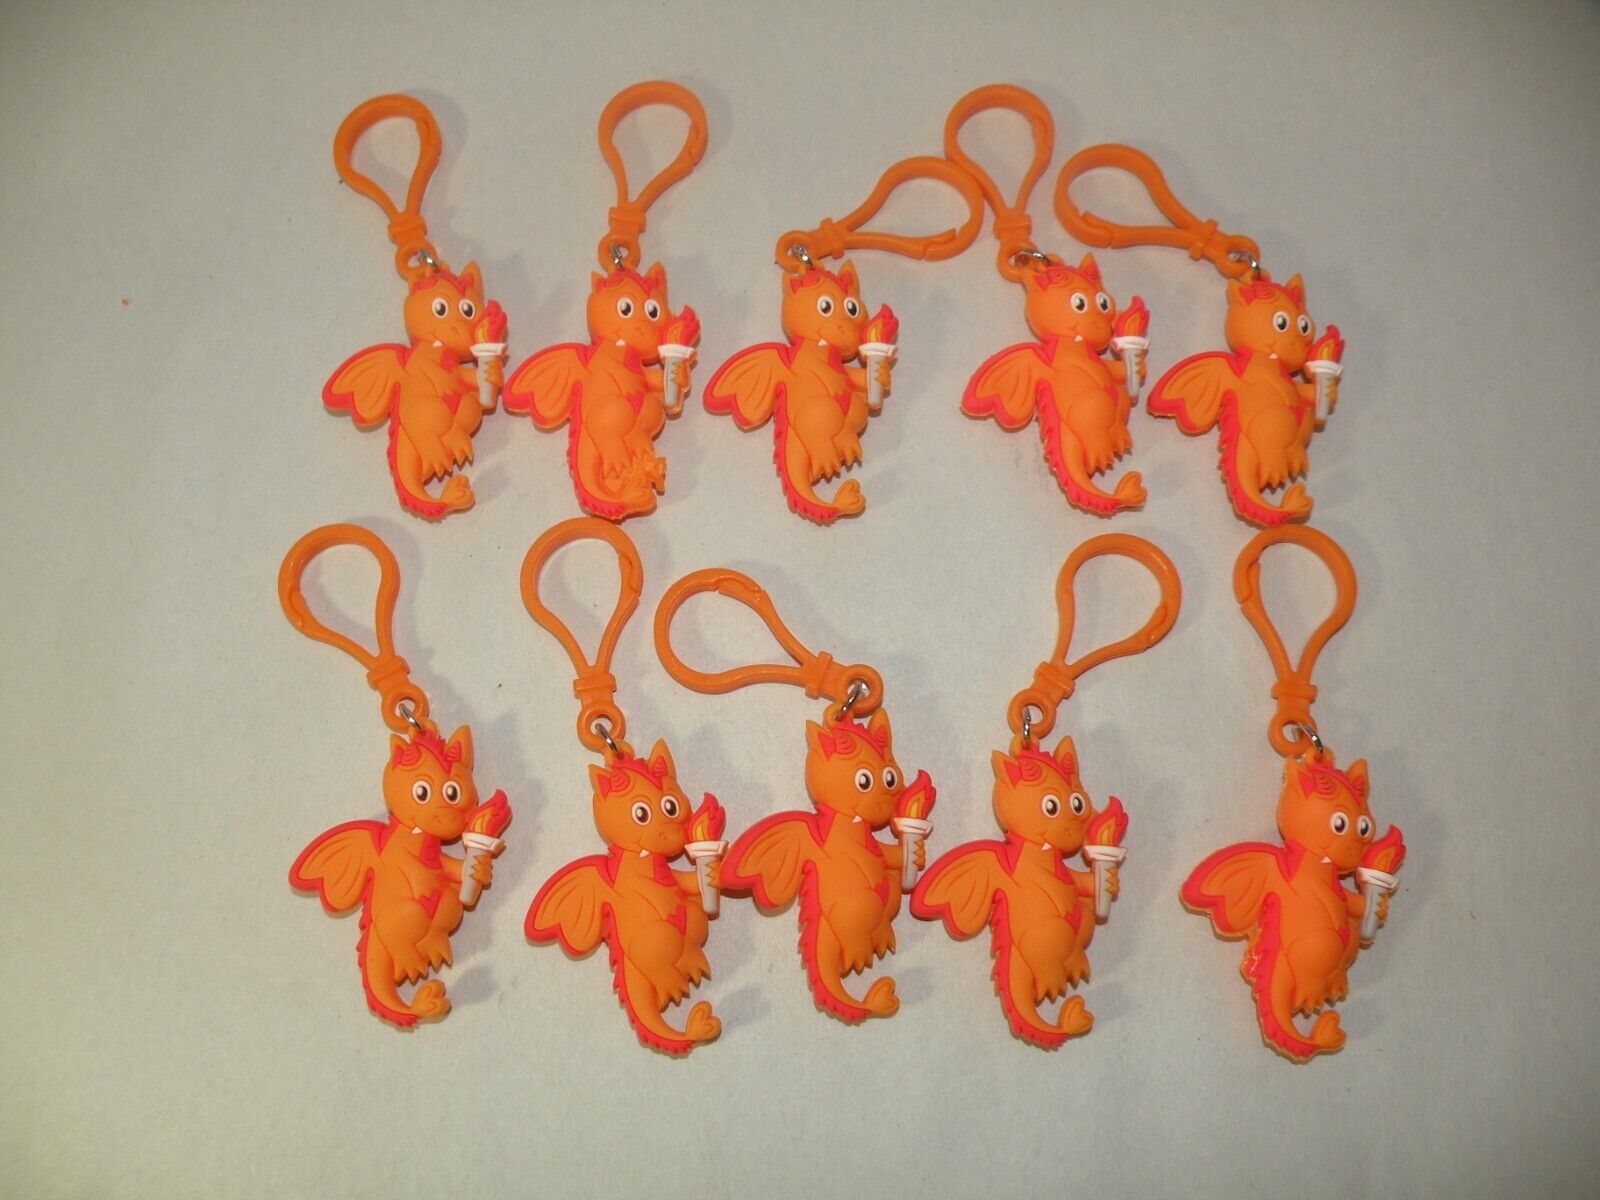 10x Kids Challenge Keychain Hearty Orange Dragon American Heart Association